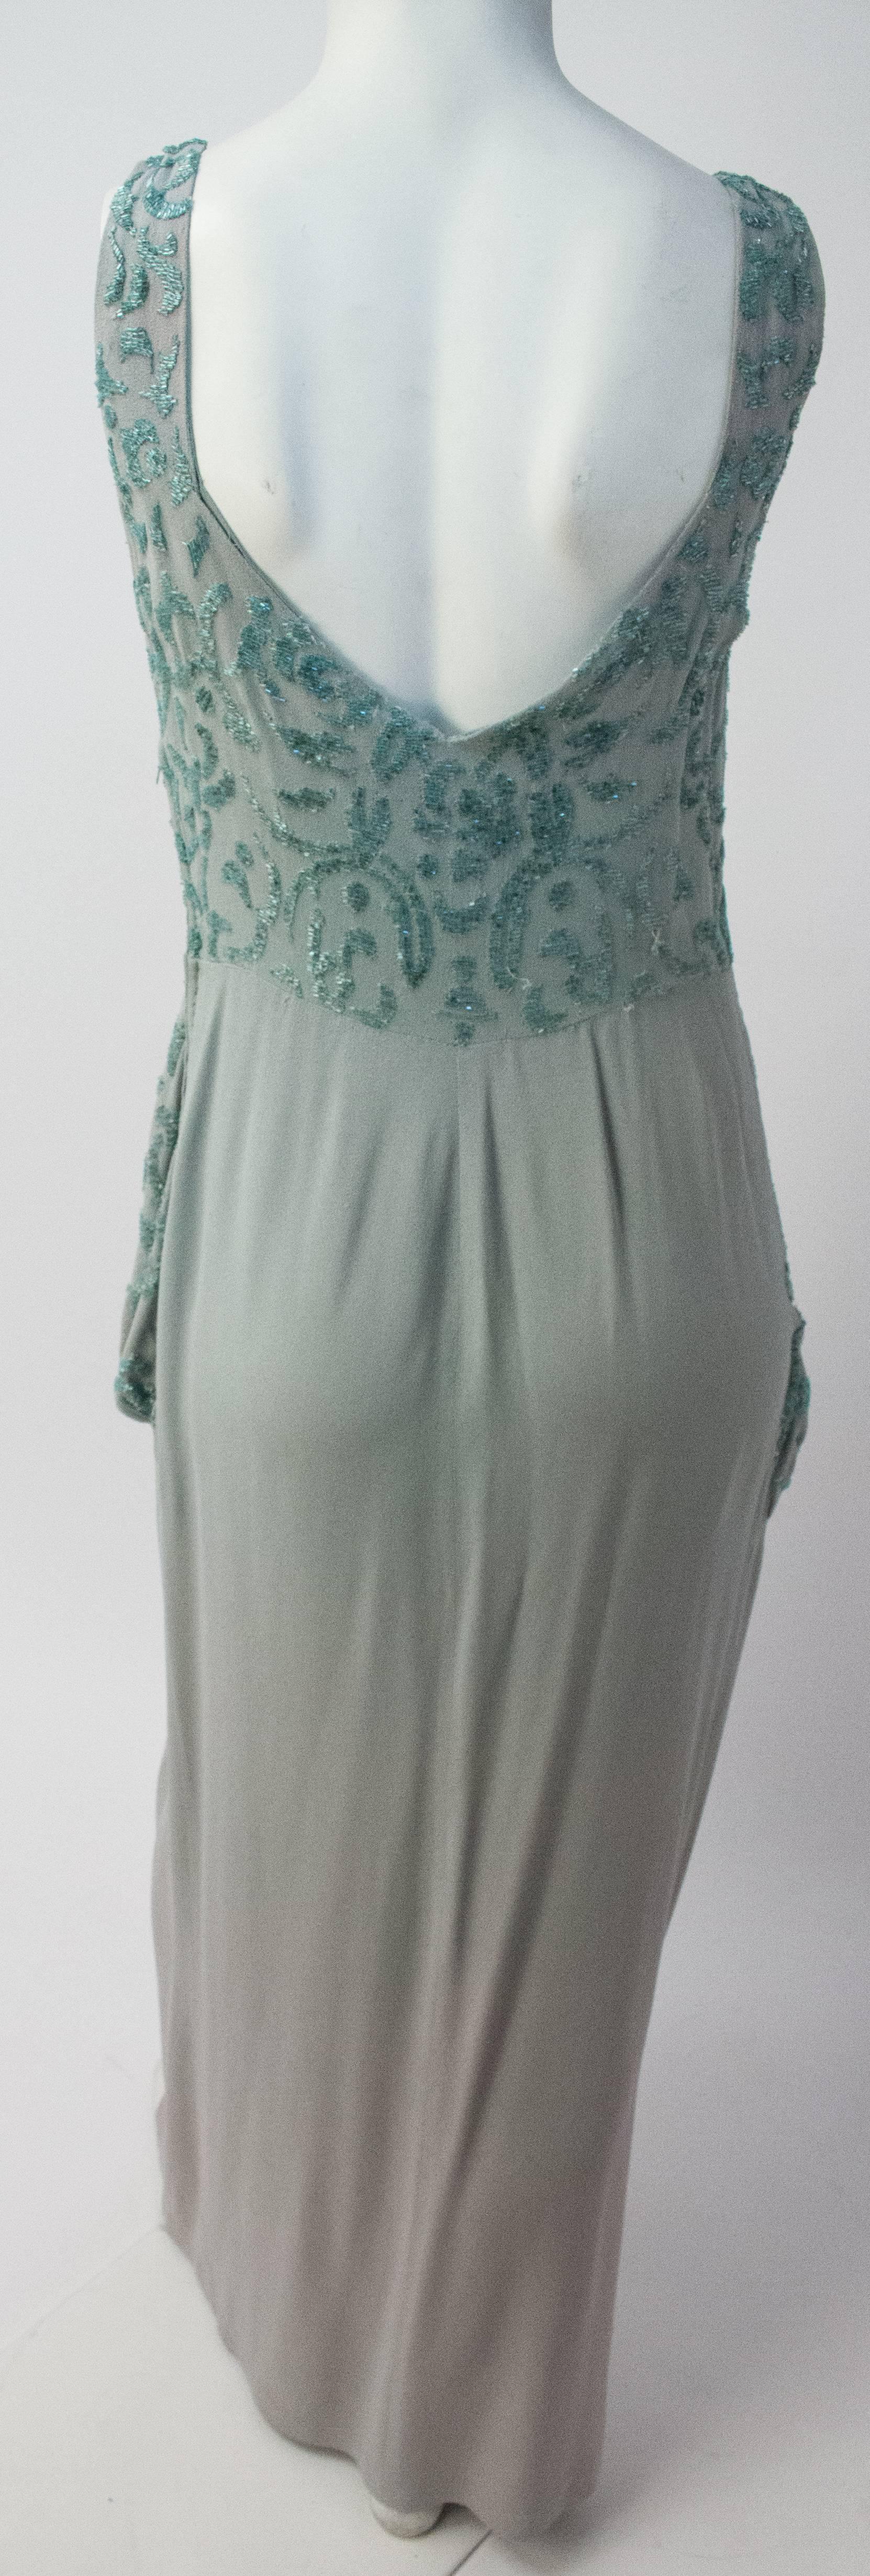 40s Beaded Peplum Evening Dress. Glass beads on heavy crepe. Side zip closure. Has pockets!